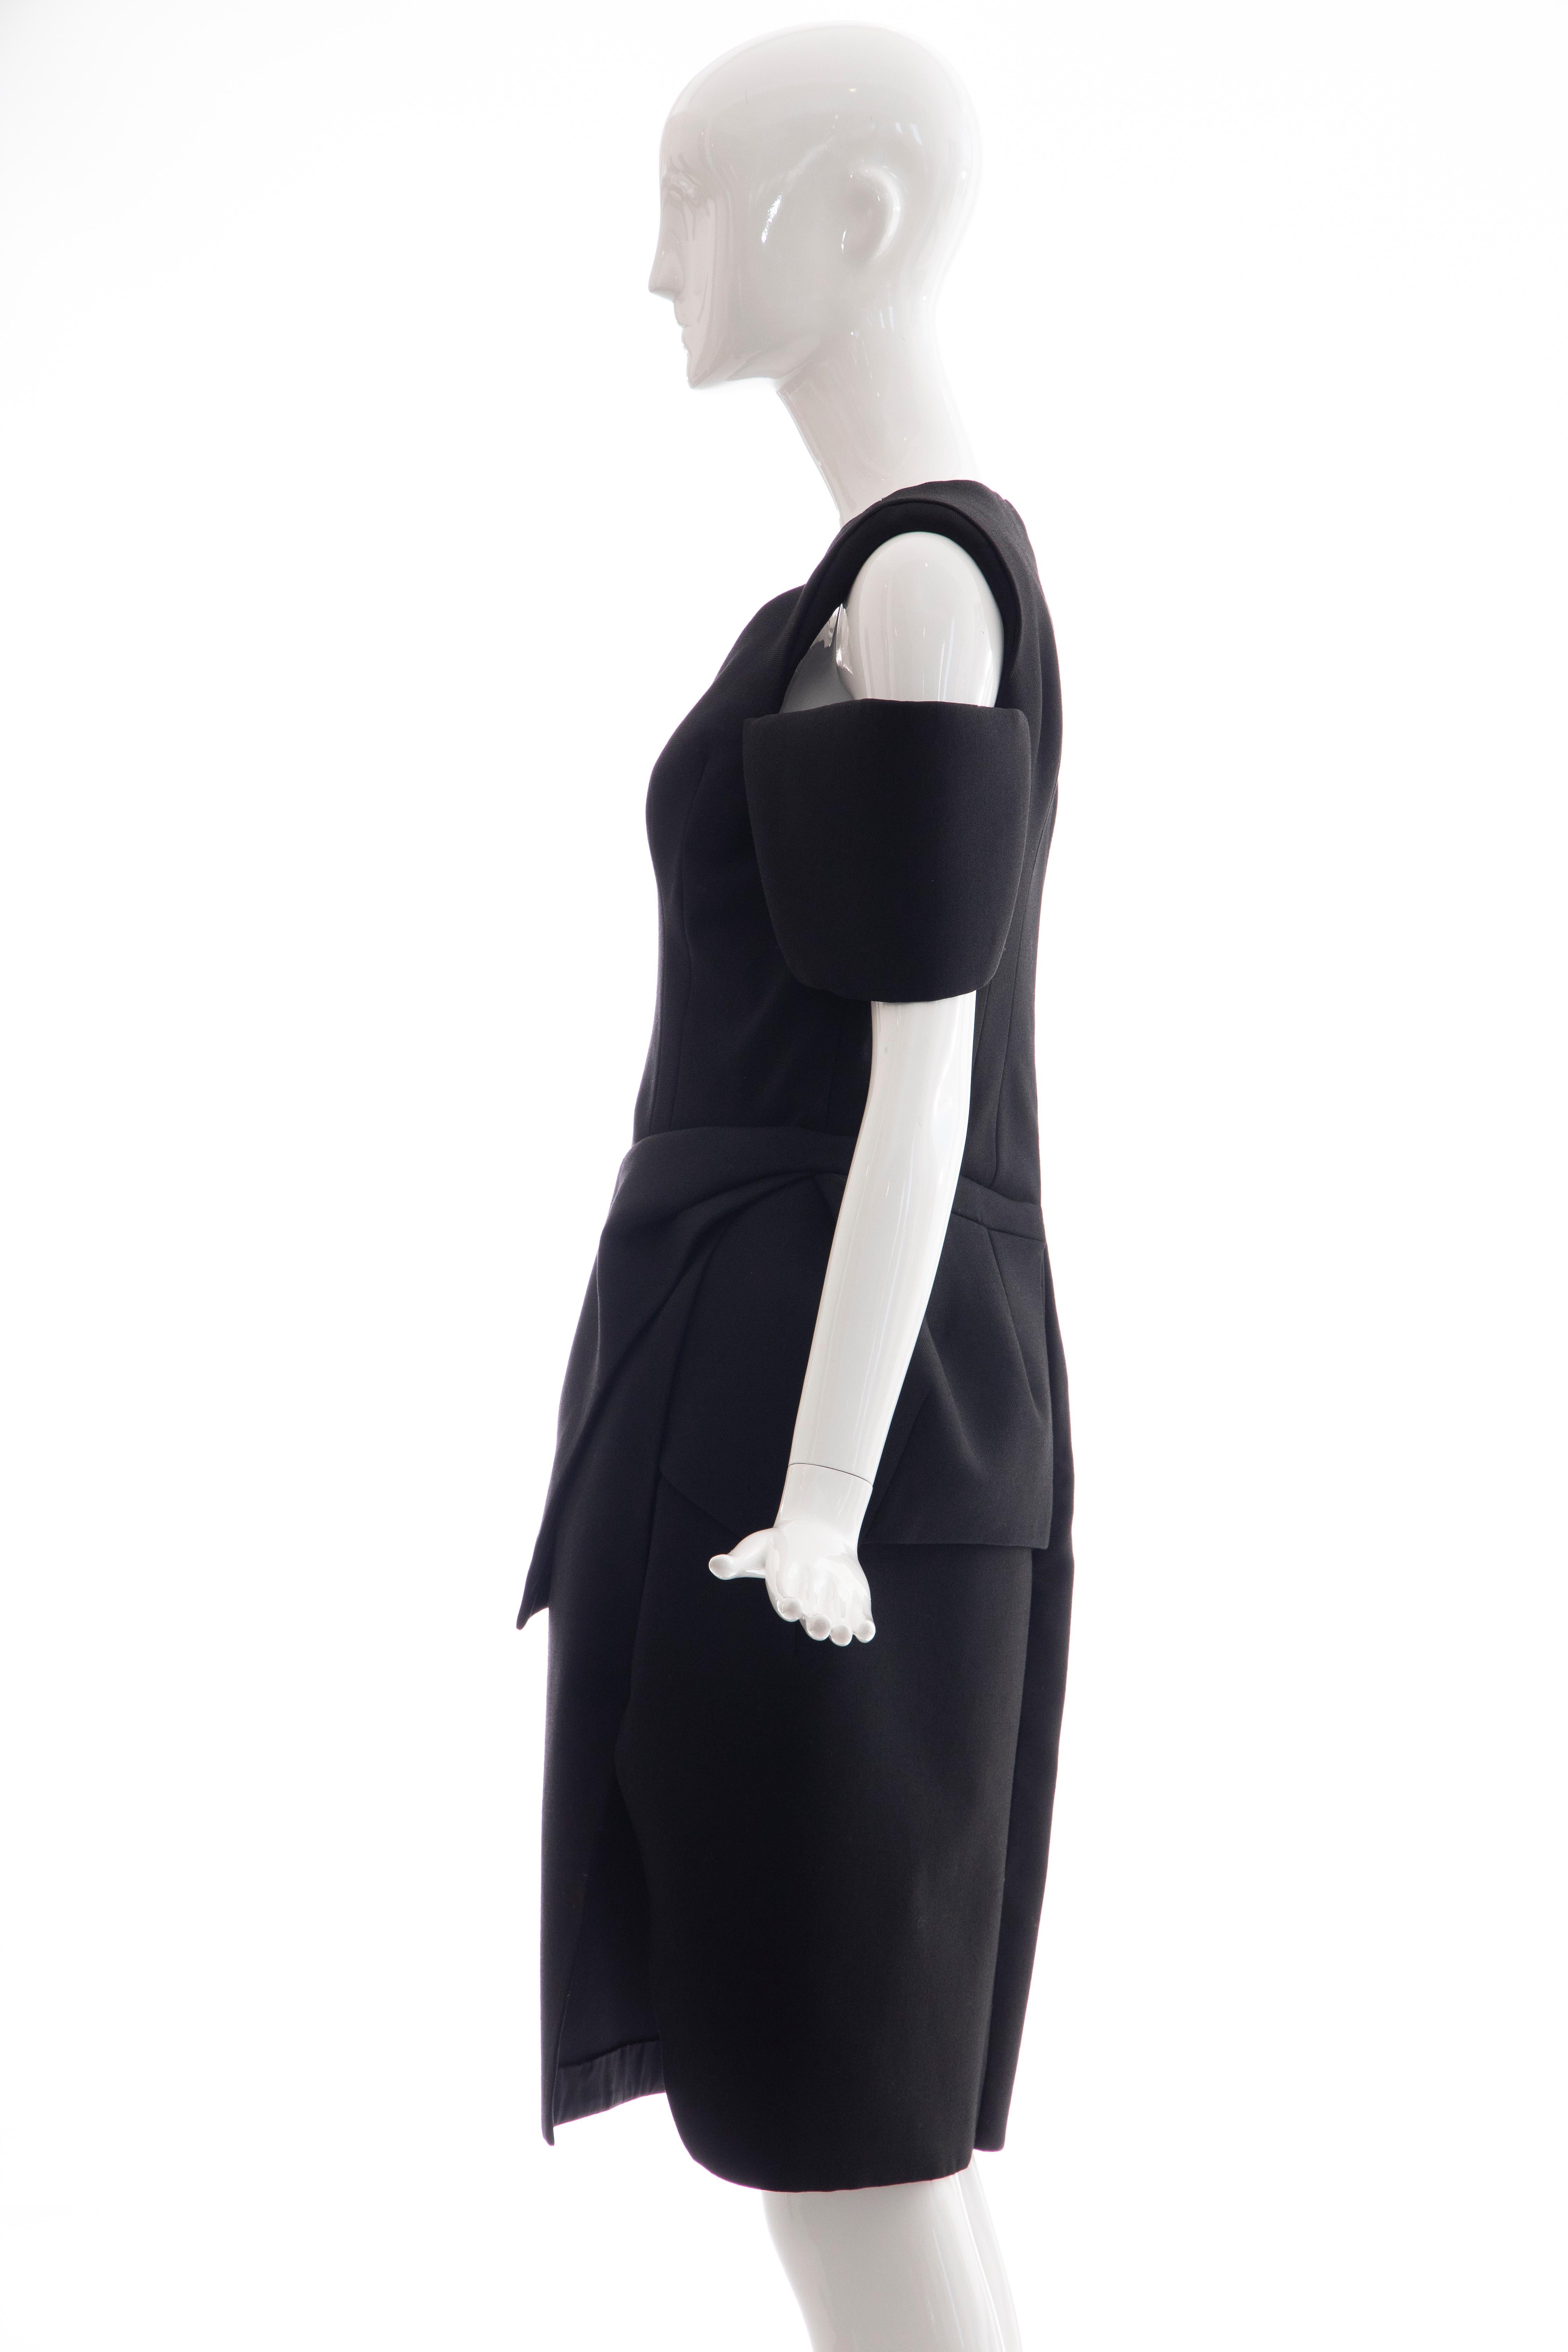 Nicolas Ghesquière for Balenciaga Runway Black Wool Structured Dress, Fall 2008 For Sale 3